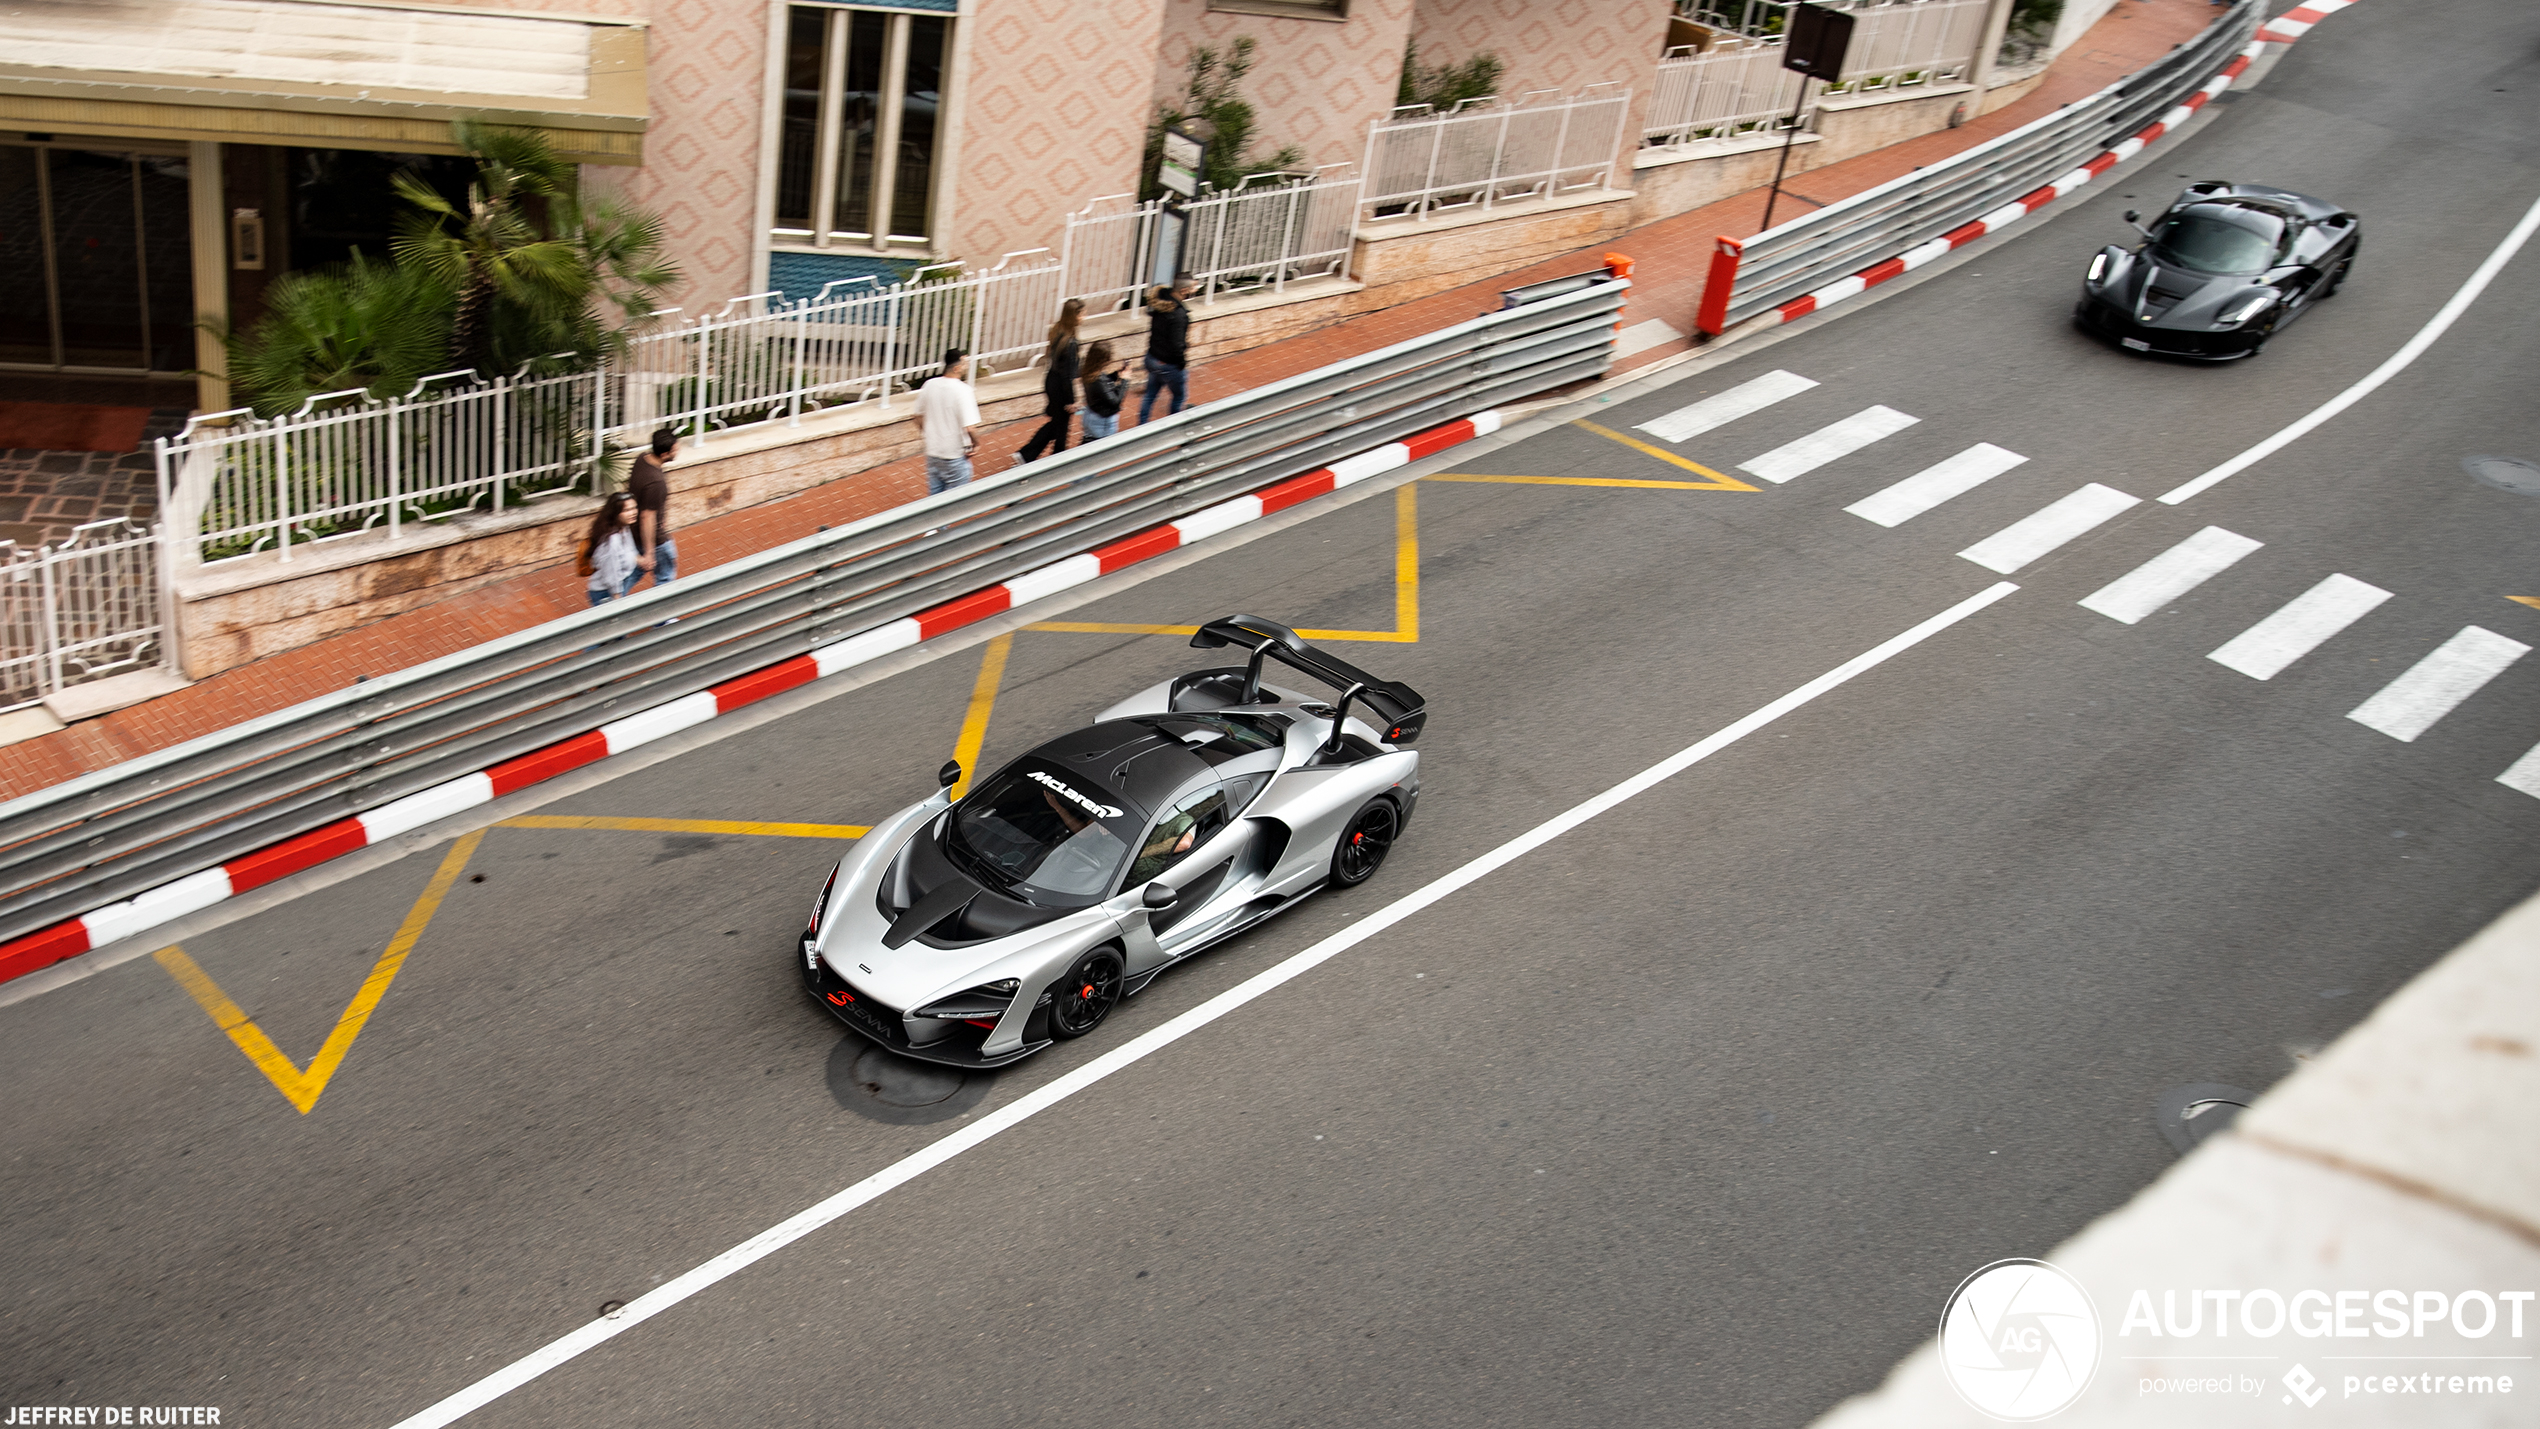 Monaco delivers a breathtaking combination on the famous Formula 1 circuit